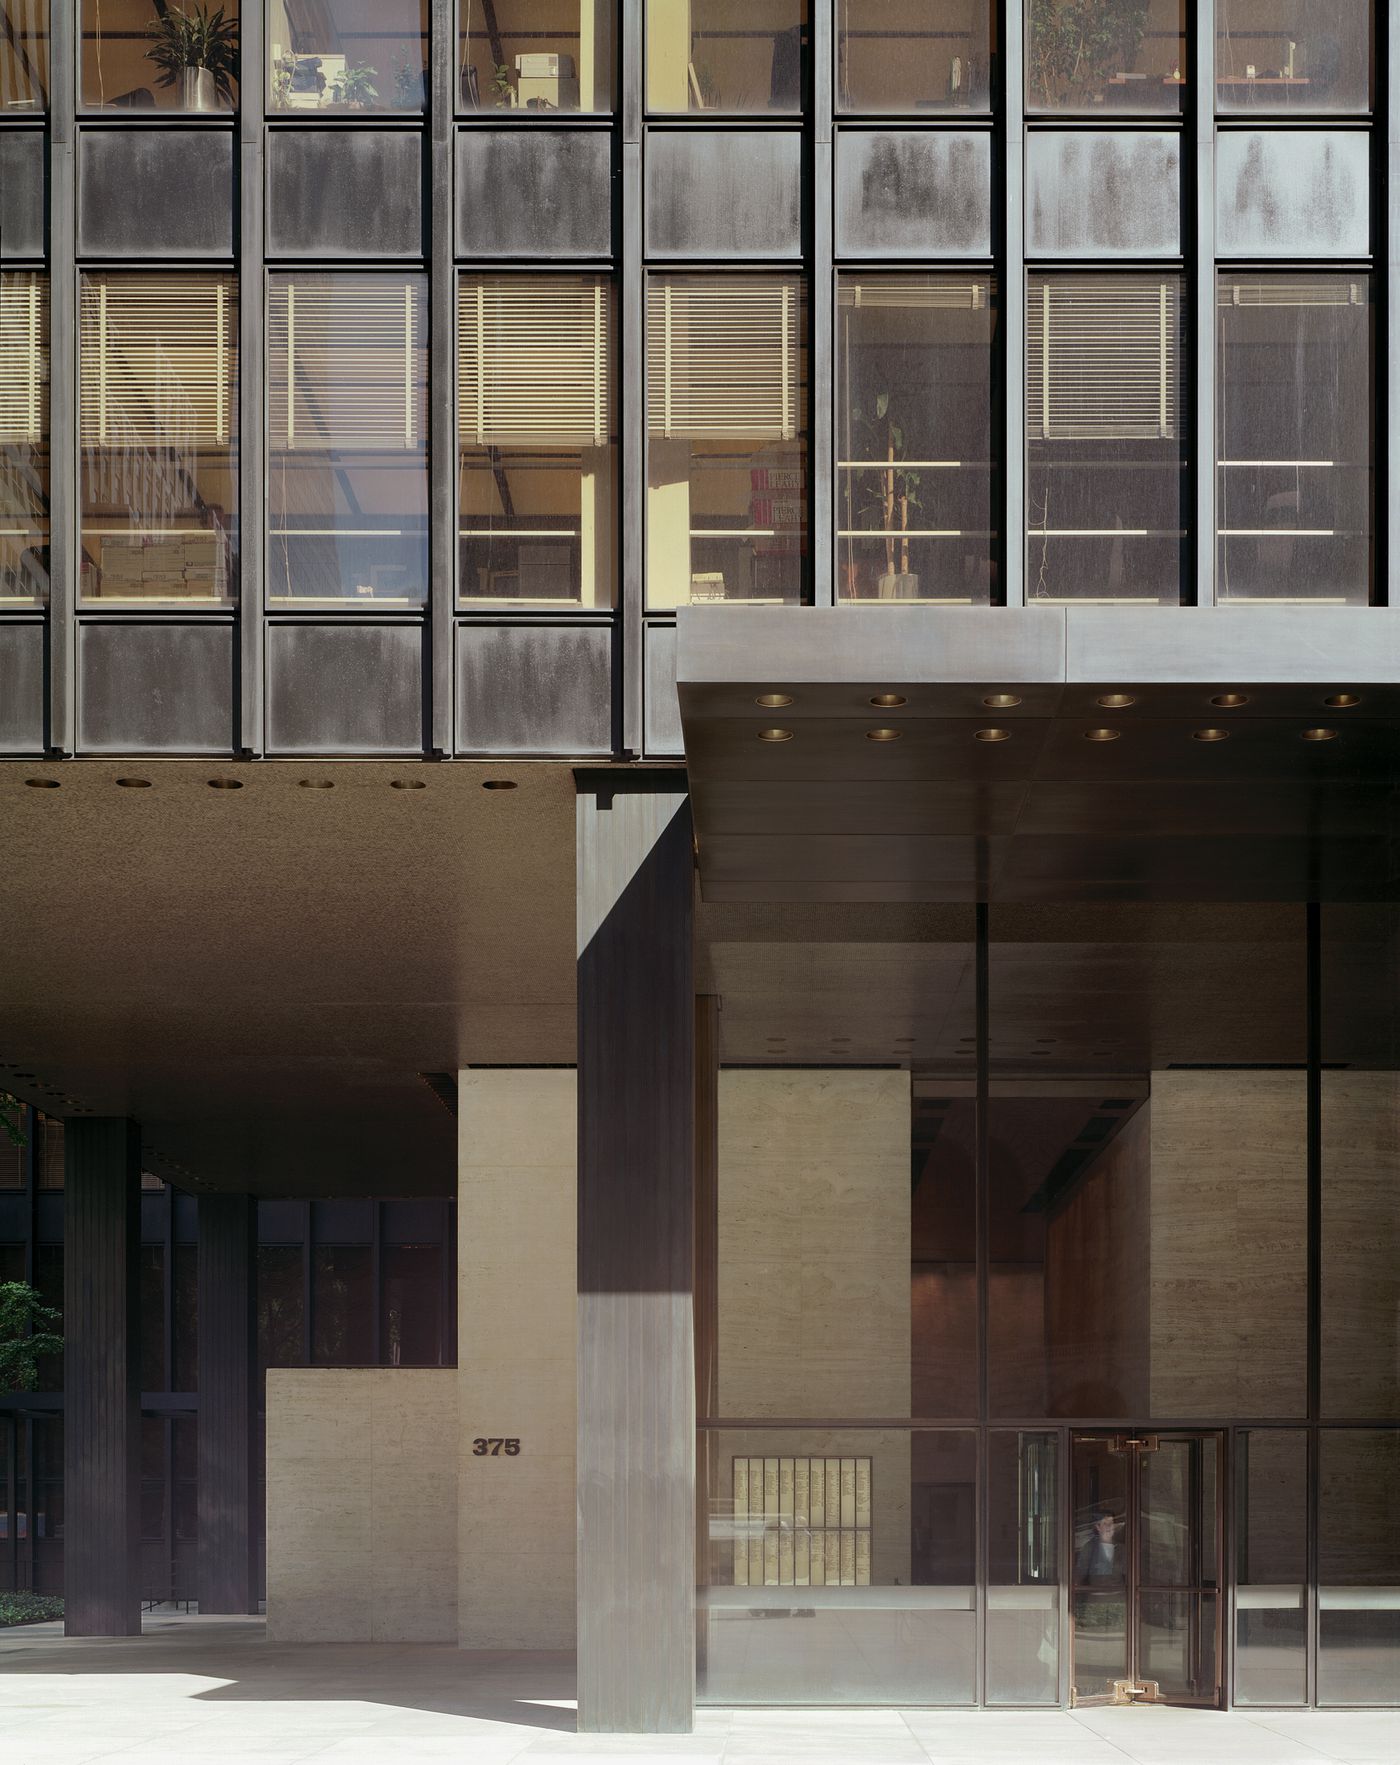 Seagram Building, New York: travertine core traversing the lobby enclosure